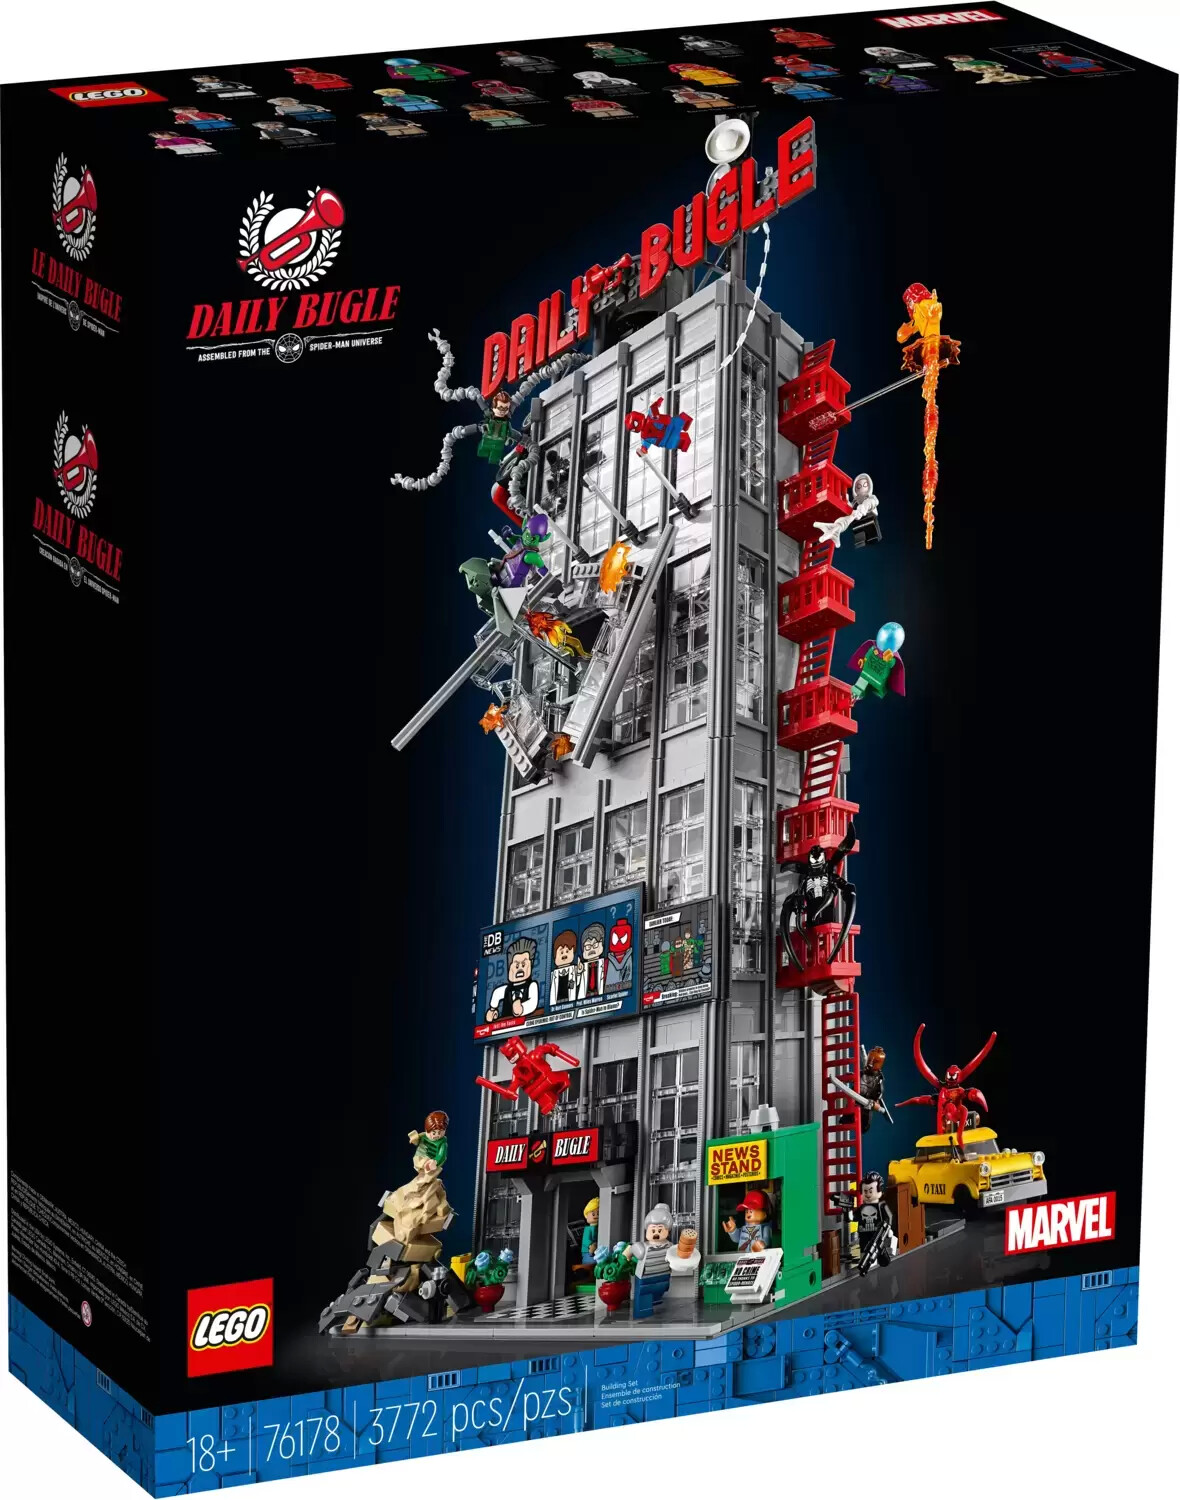 LEGO MARVEL Super Heroes - Daily Bugle